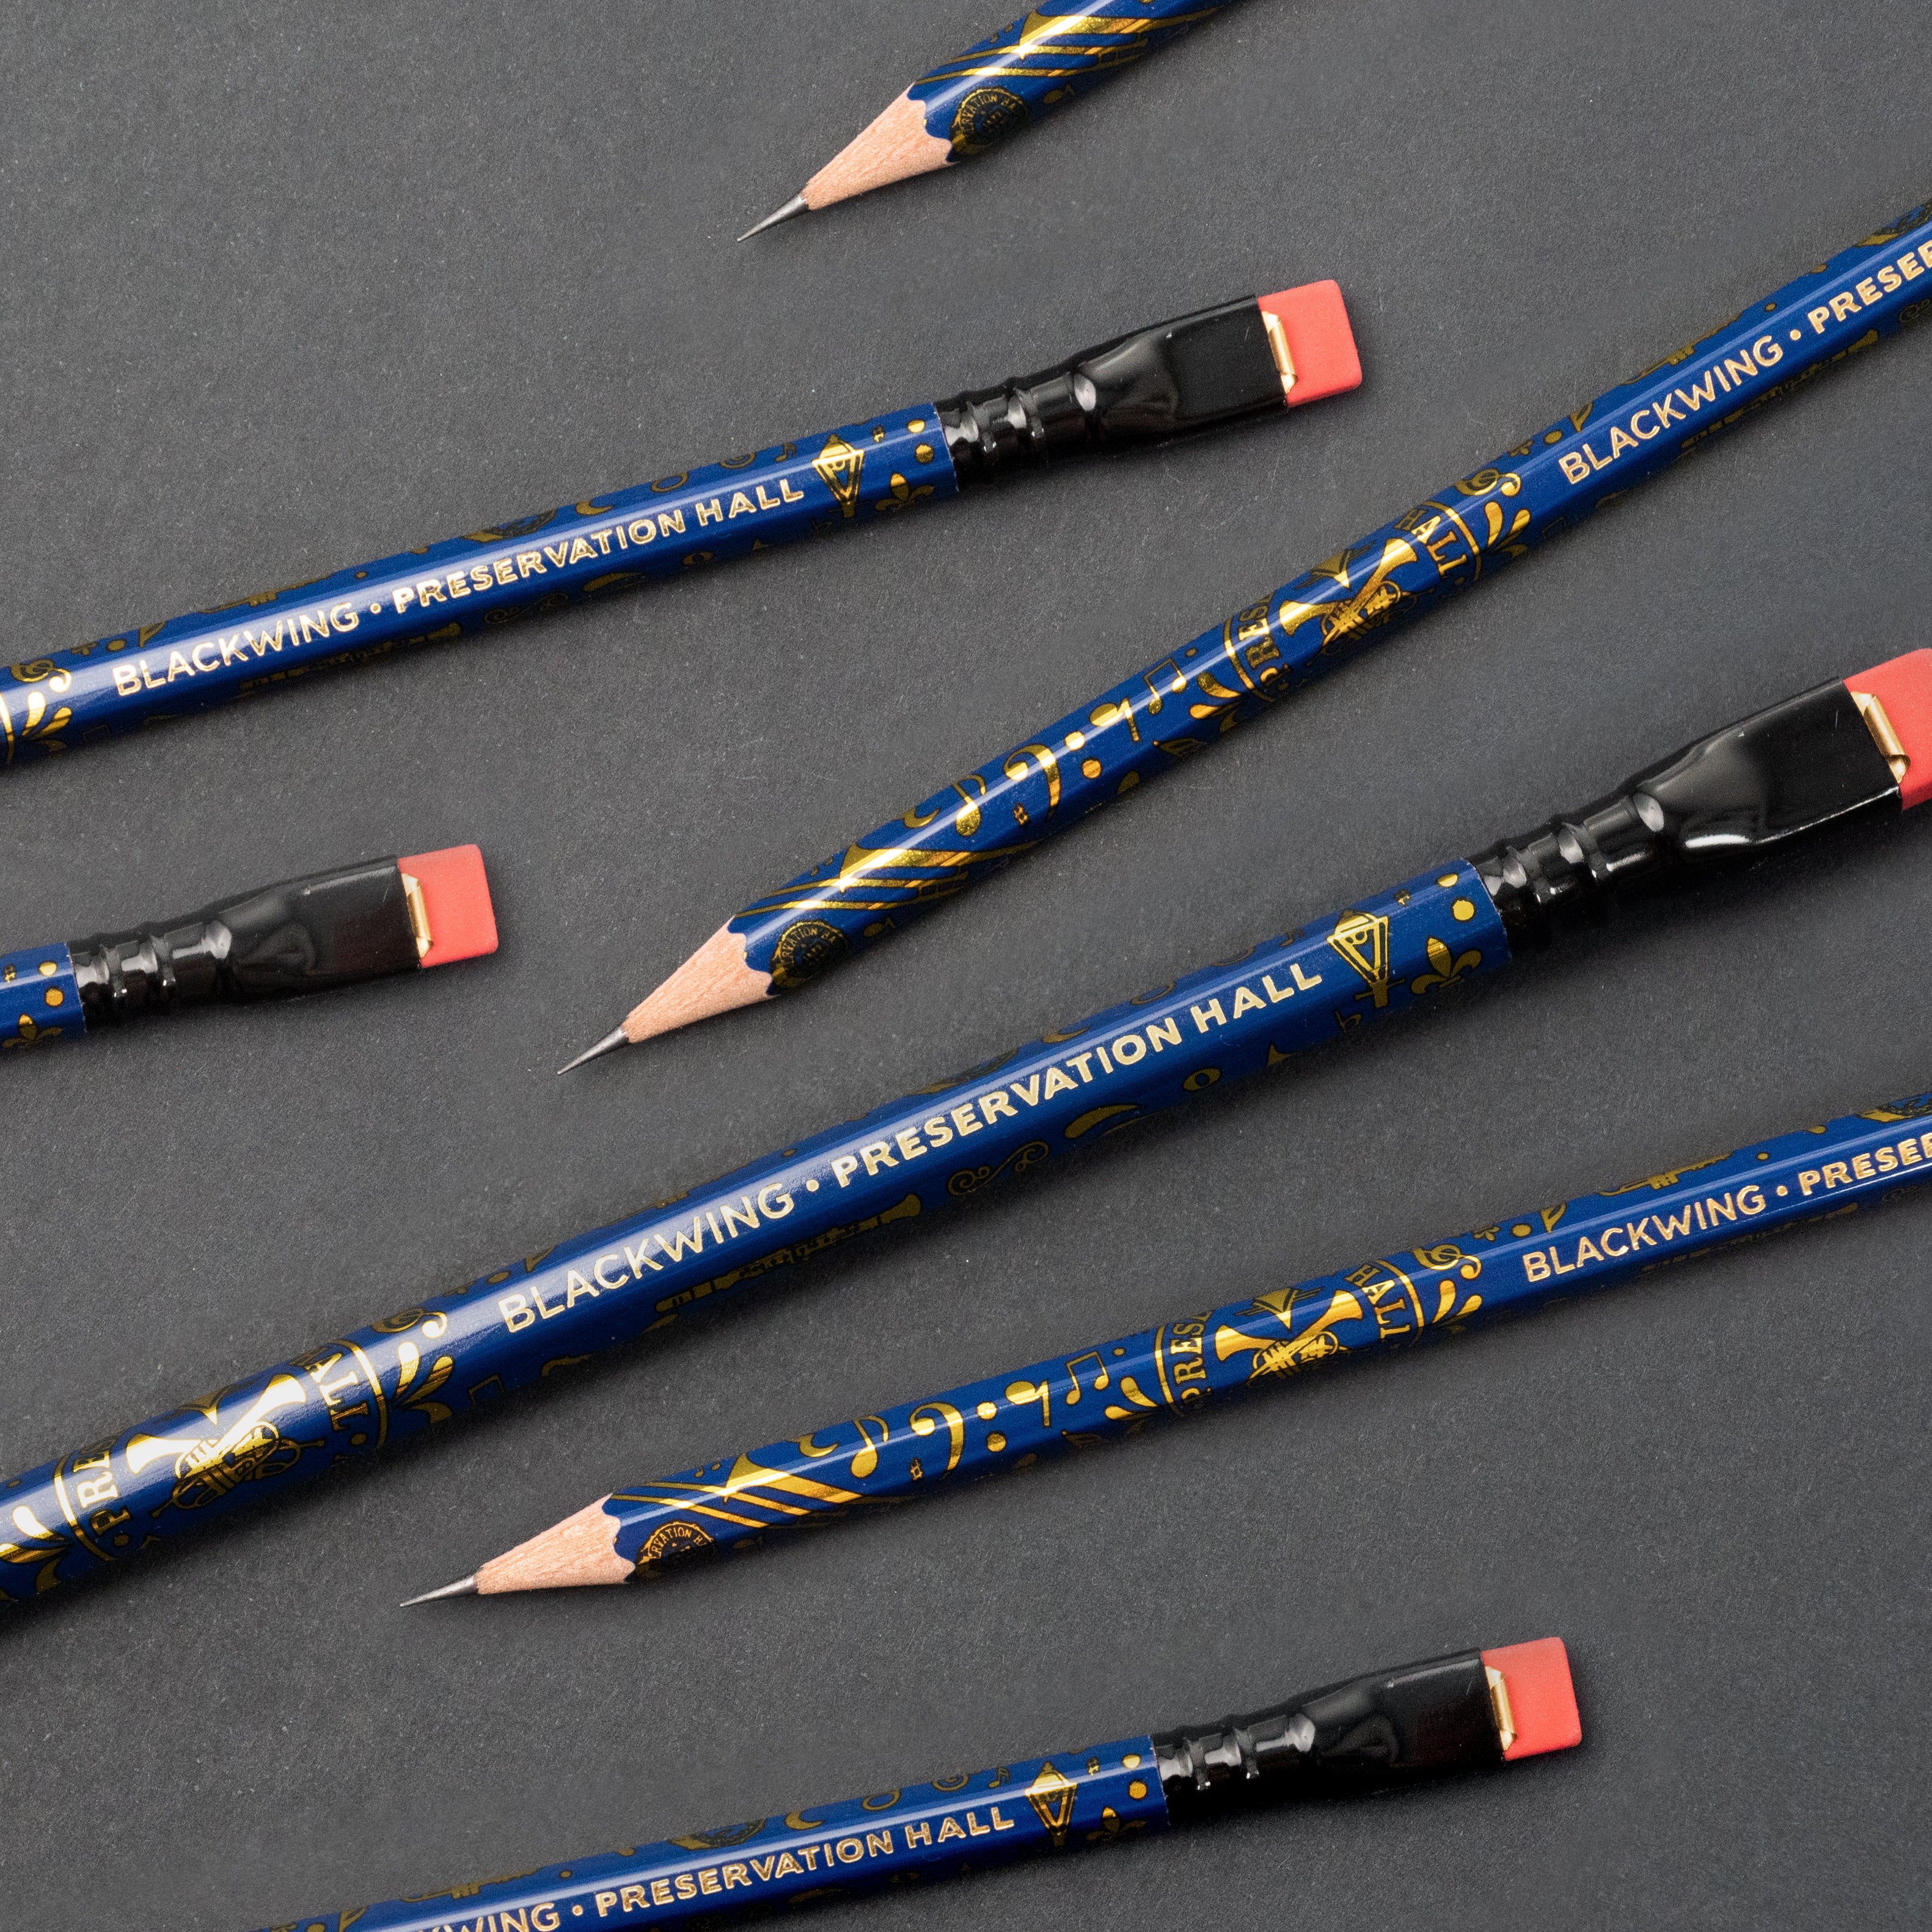 Blackwing Pencils – ARCH Art Supplies